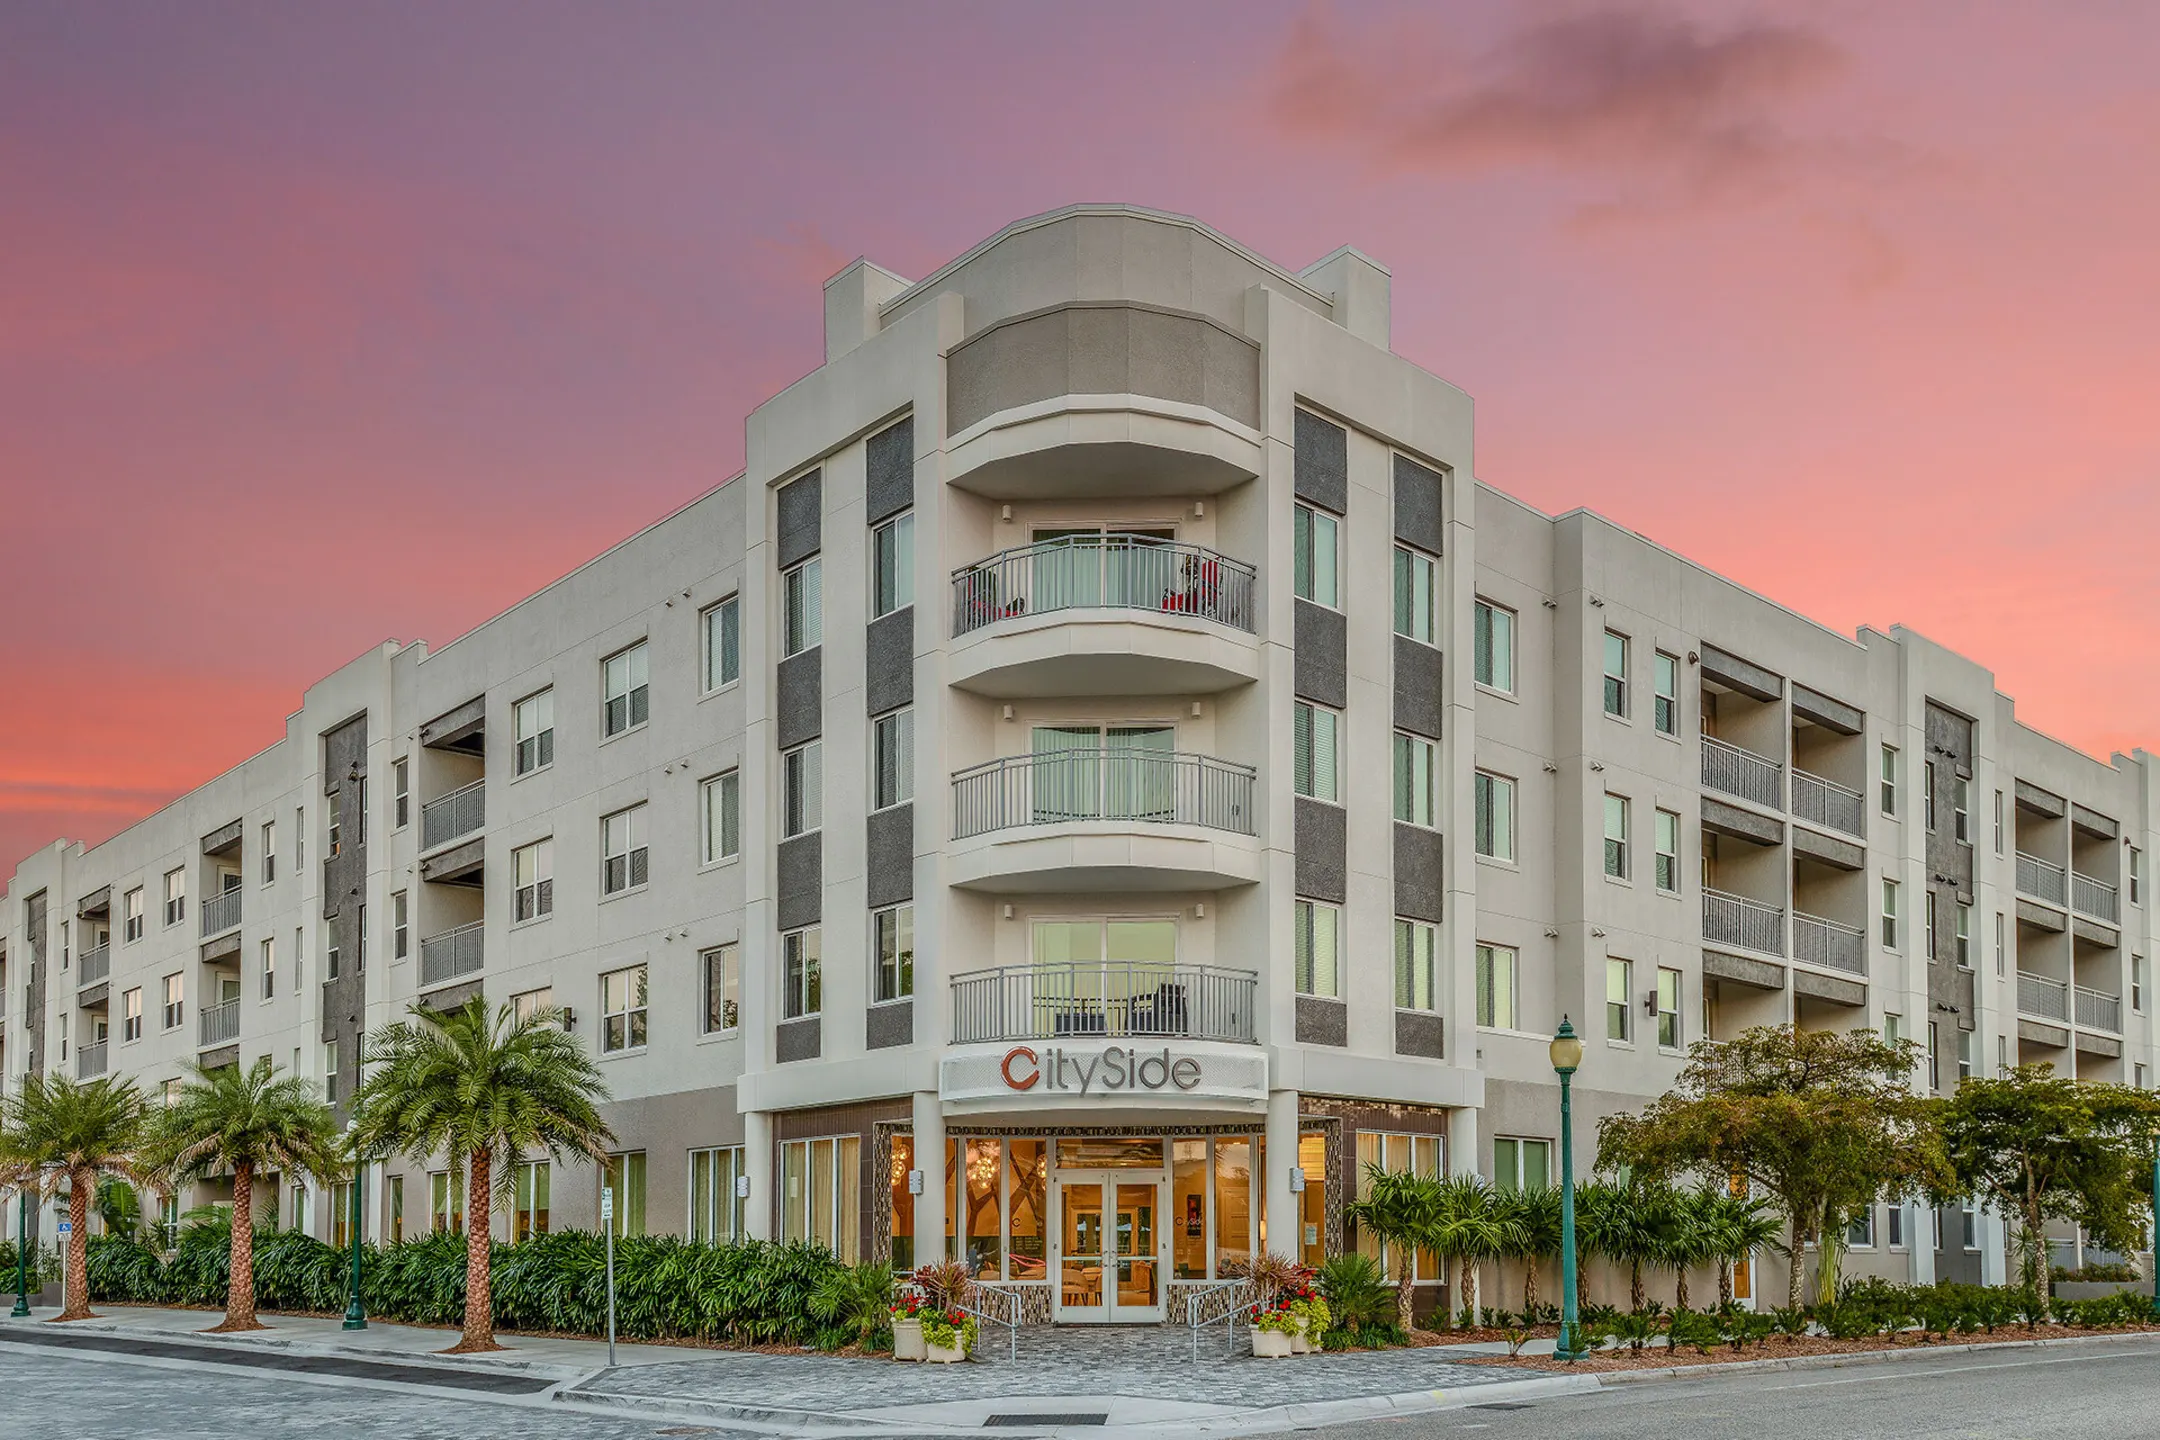 Building - CitySide - Sarasota, FL